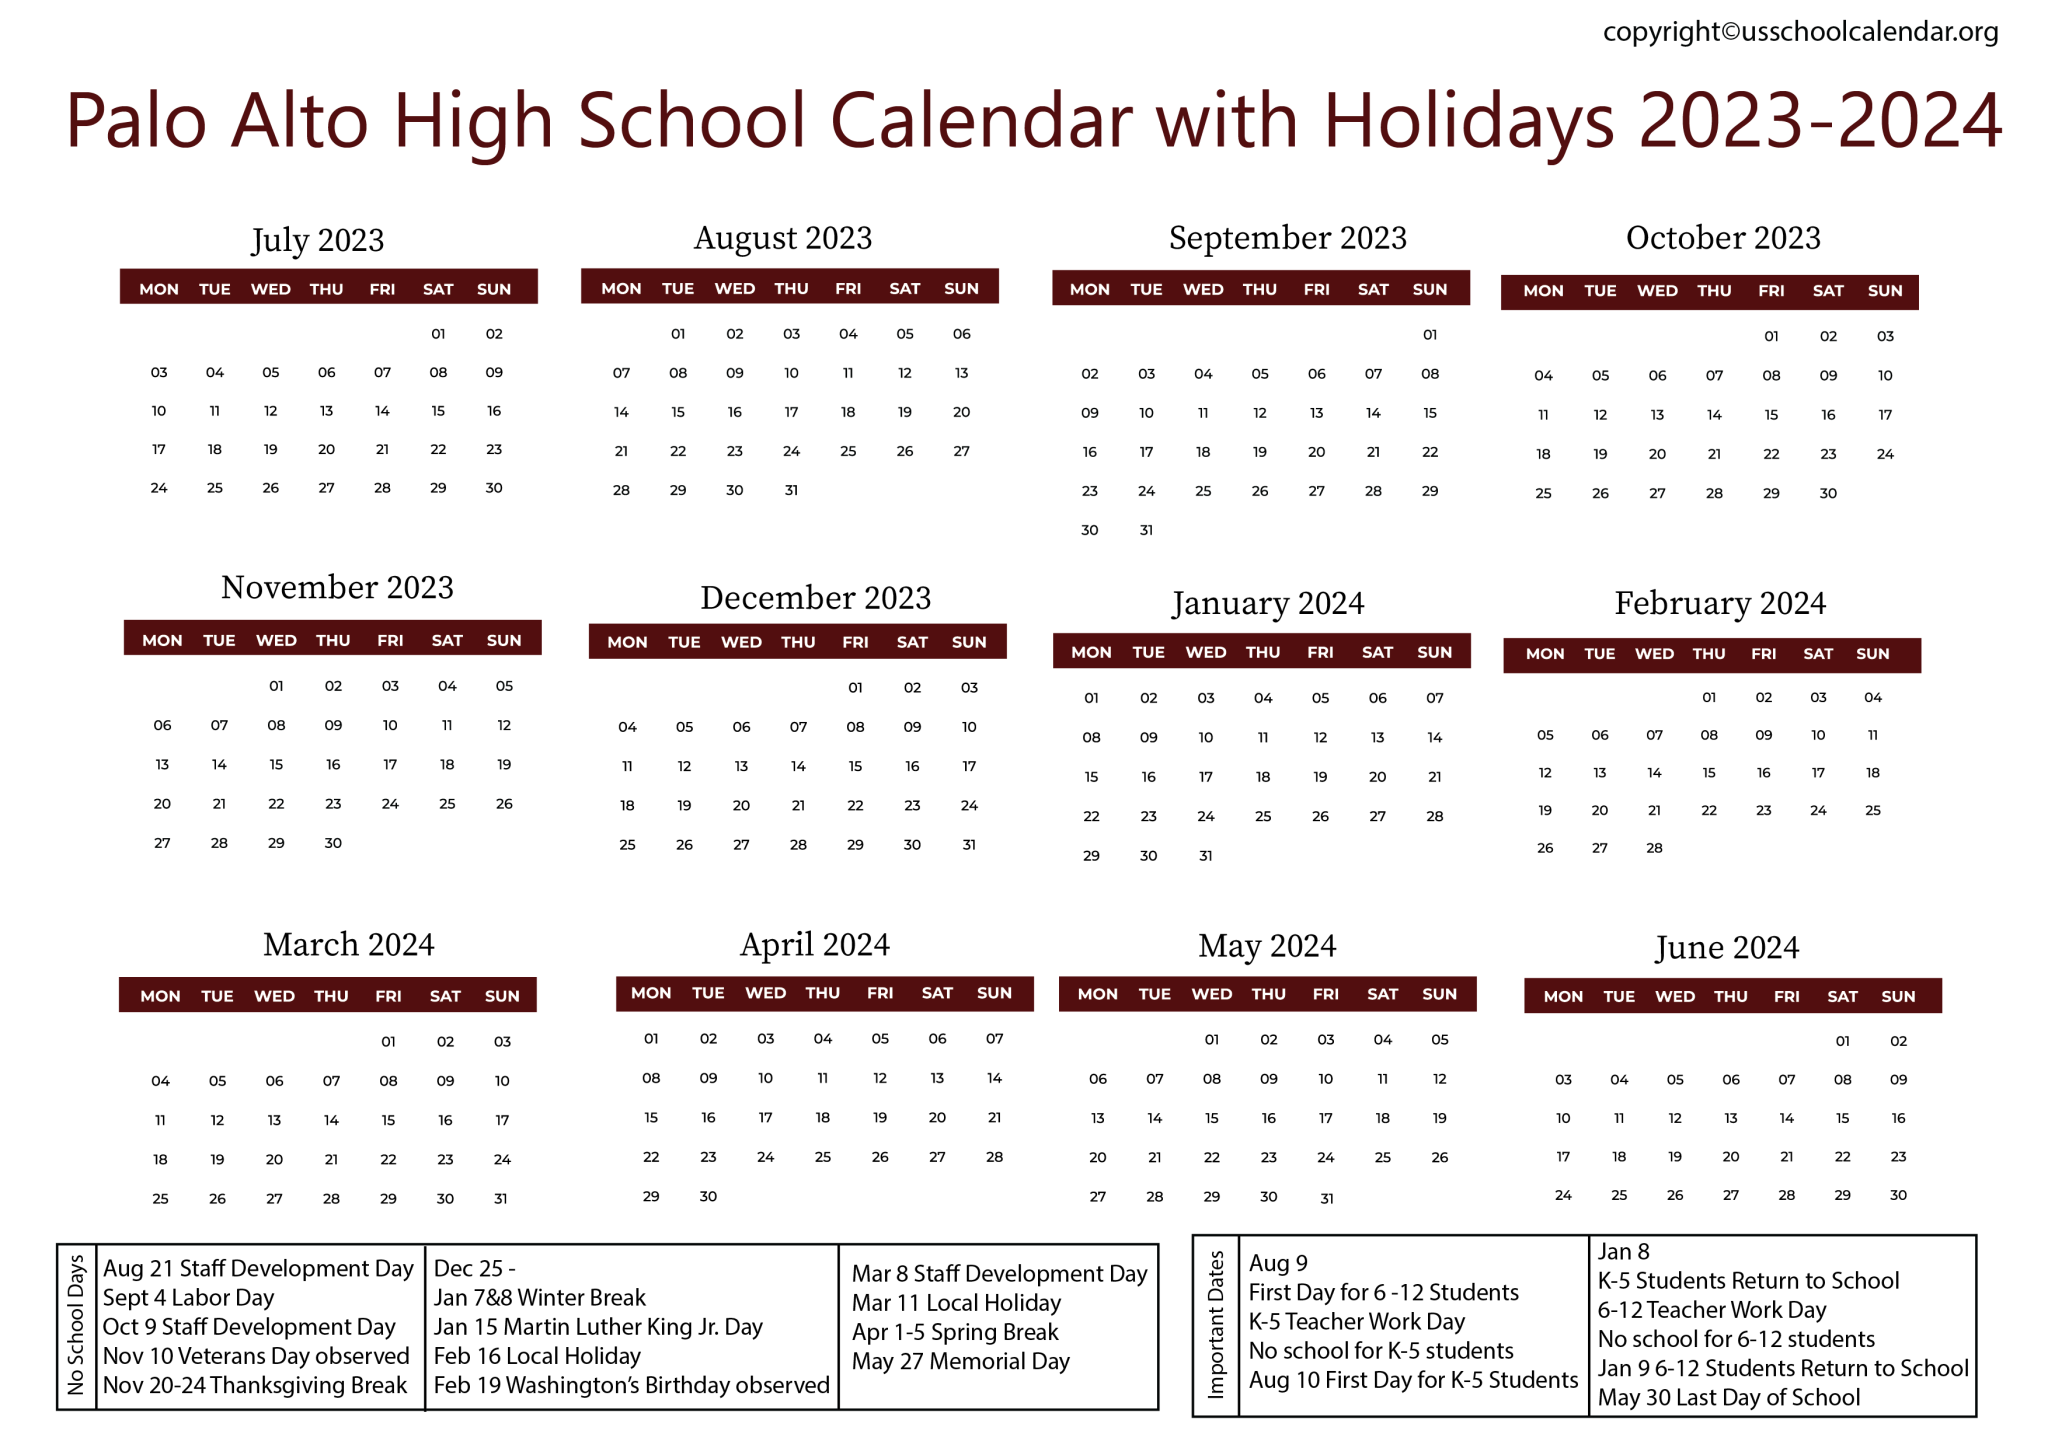 Palo Alto High School Holiday Calendar - US School Calendar